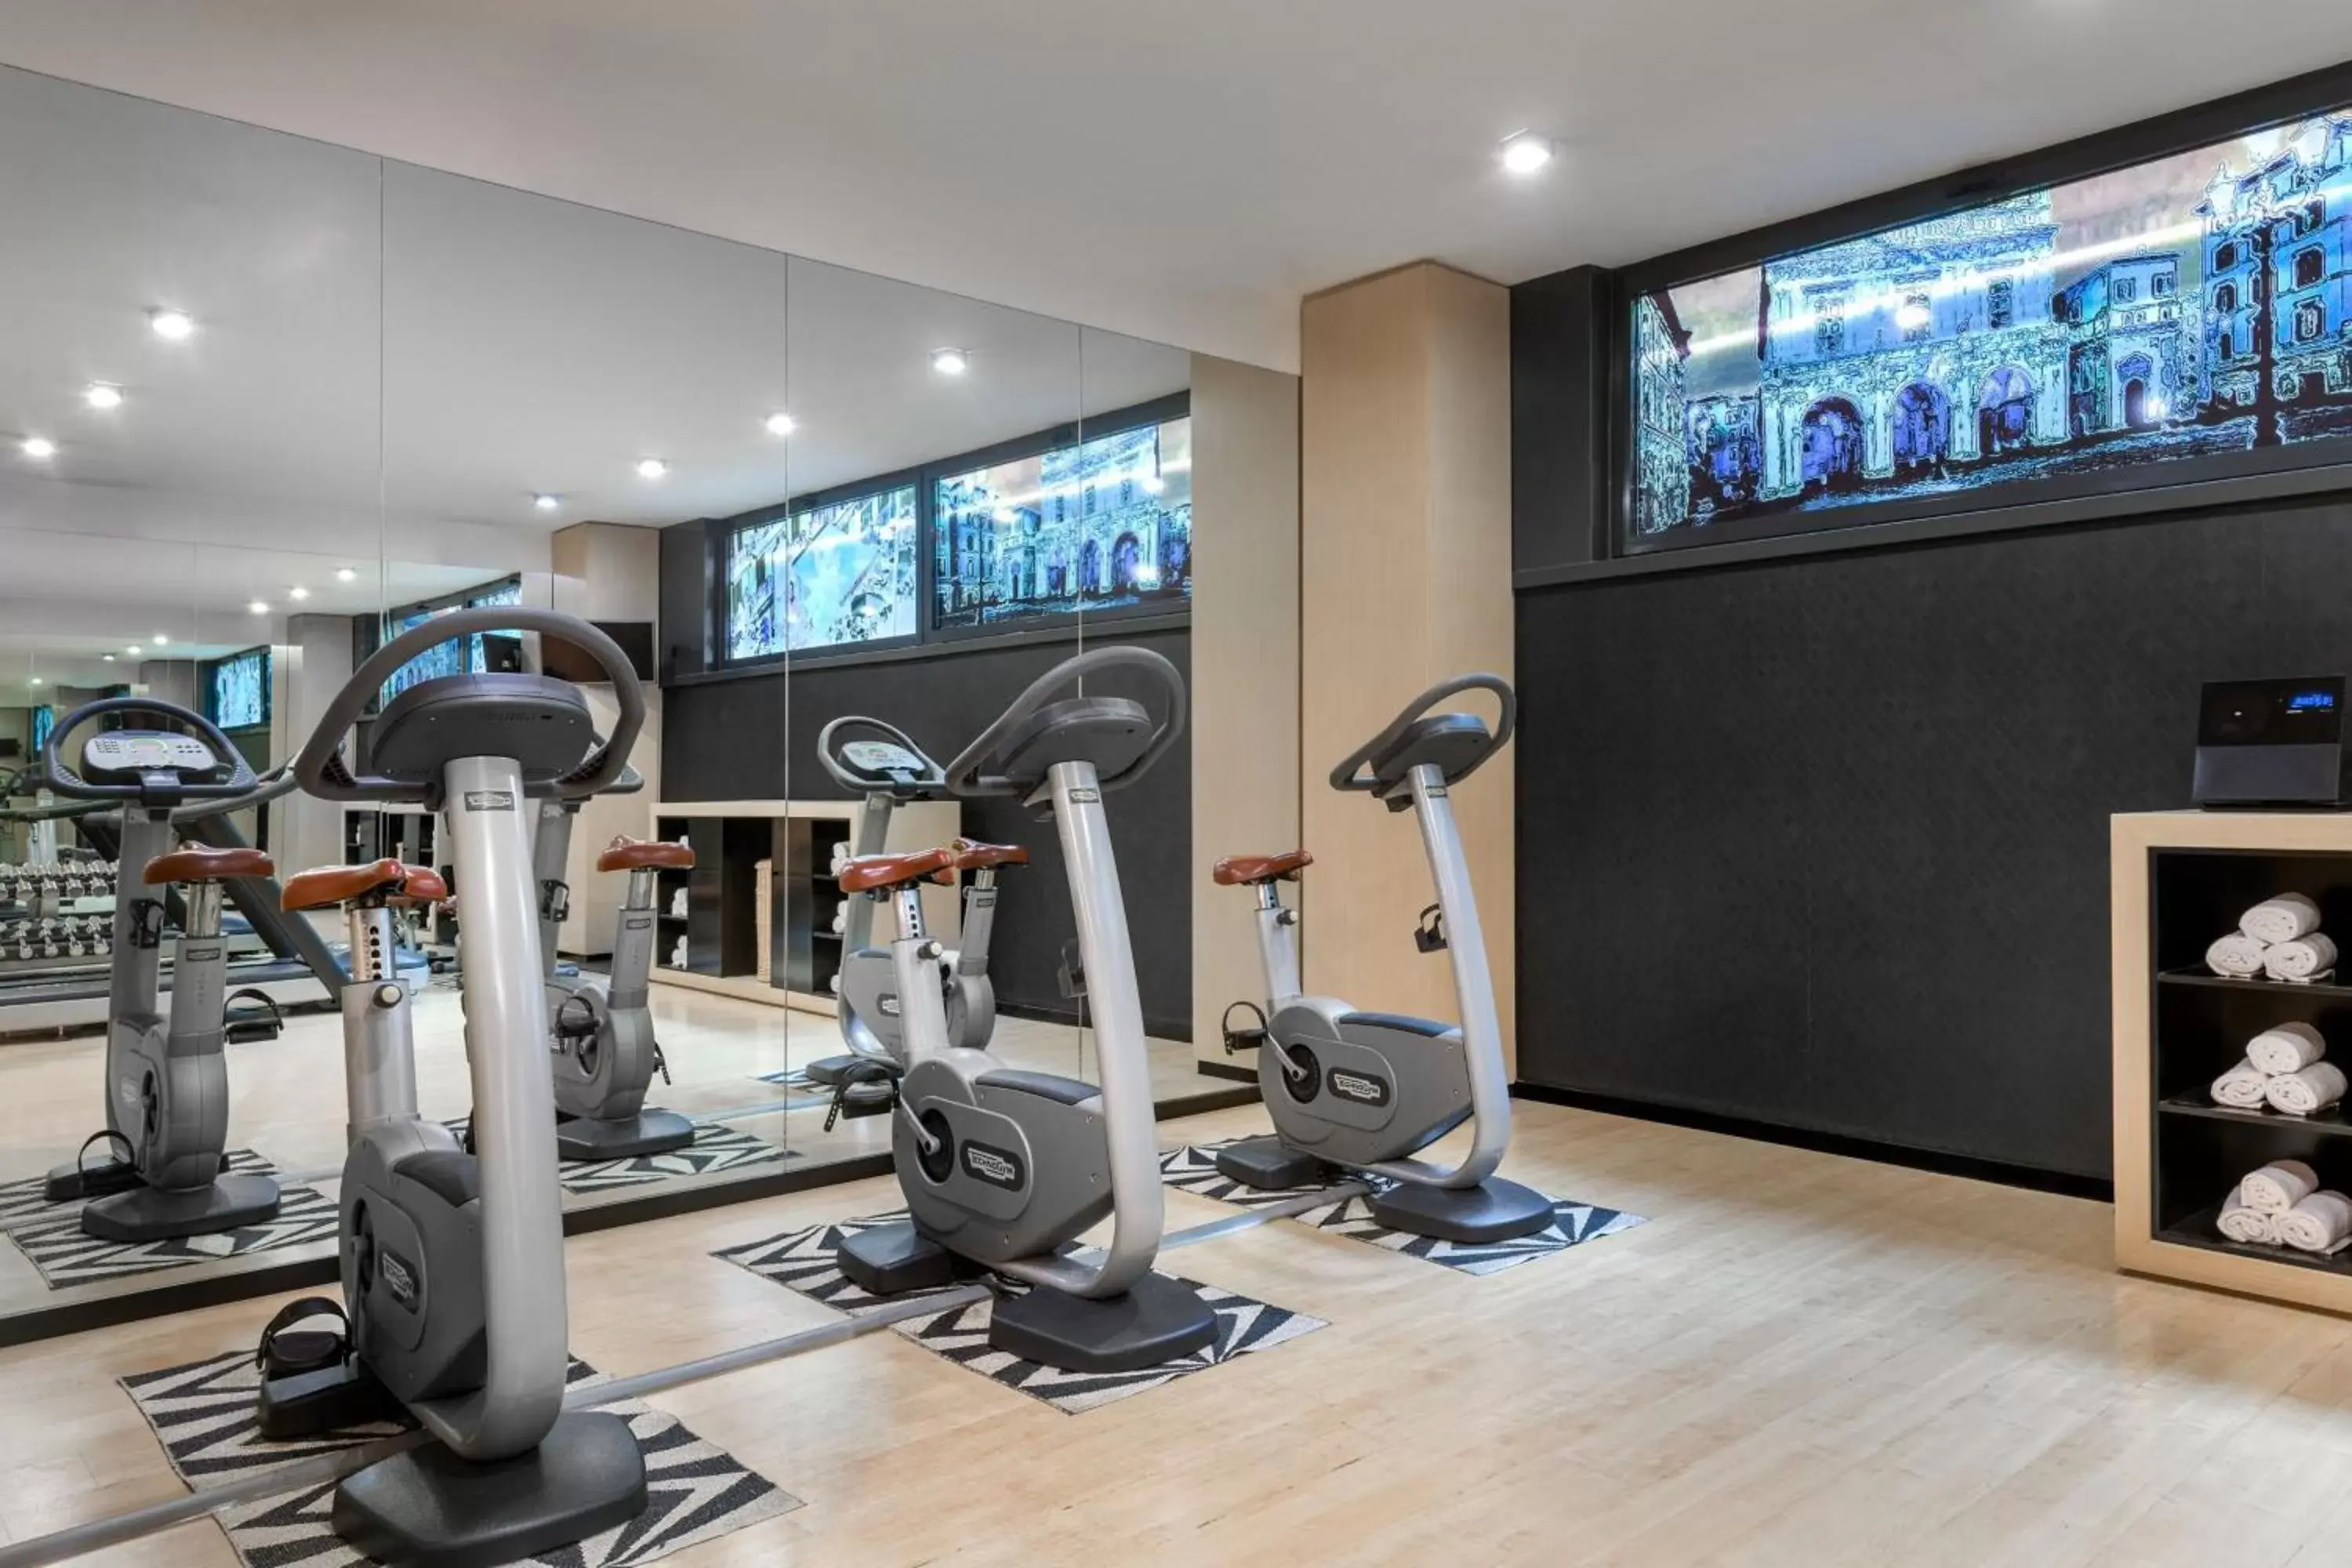 Fitness centre/facilities, Fitness Center/Facilities in AC Hotel Brescia by Marriott